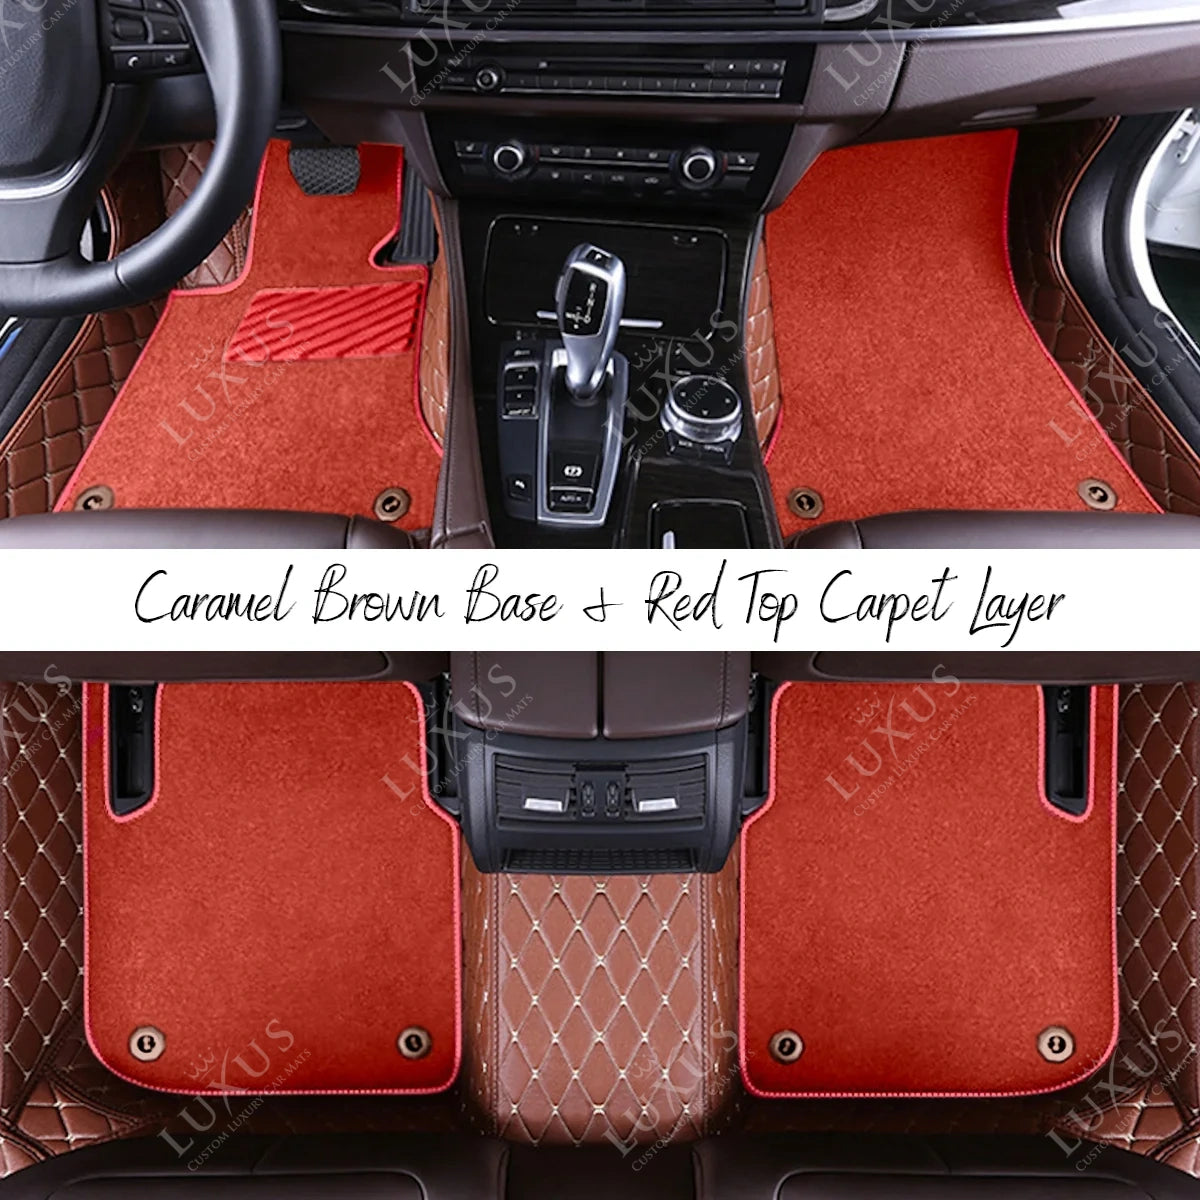 Caramel Brown Diamond Base & Red Top Carpet Double Layer Luxury Car Mats Set